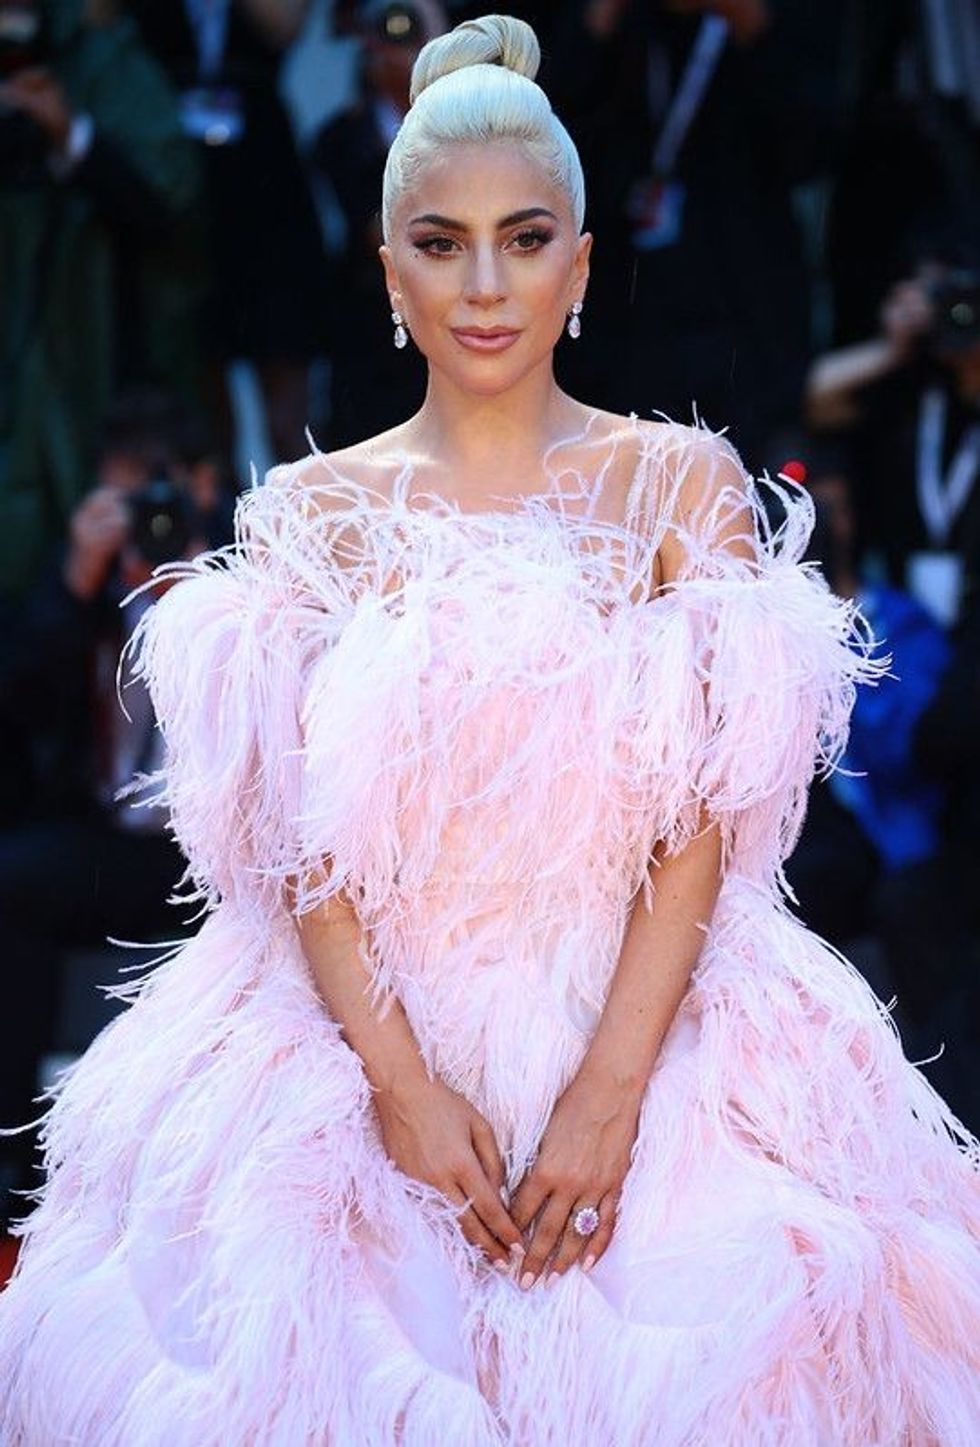 Lady Gaga in pink dress